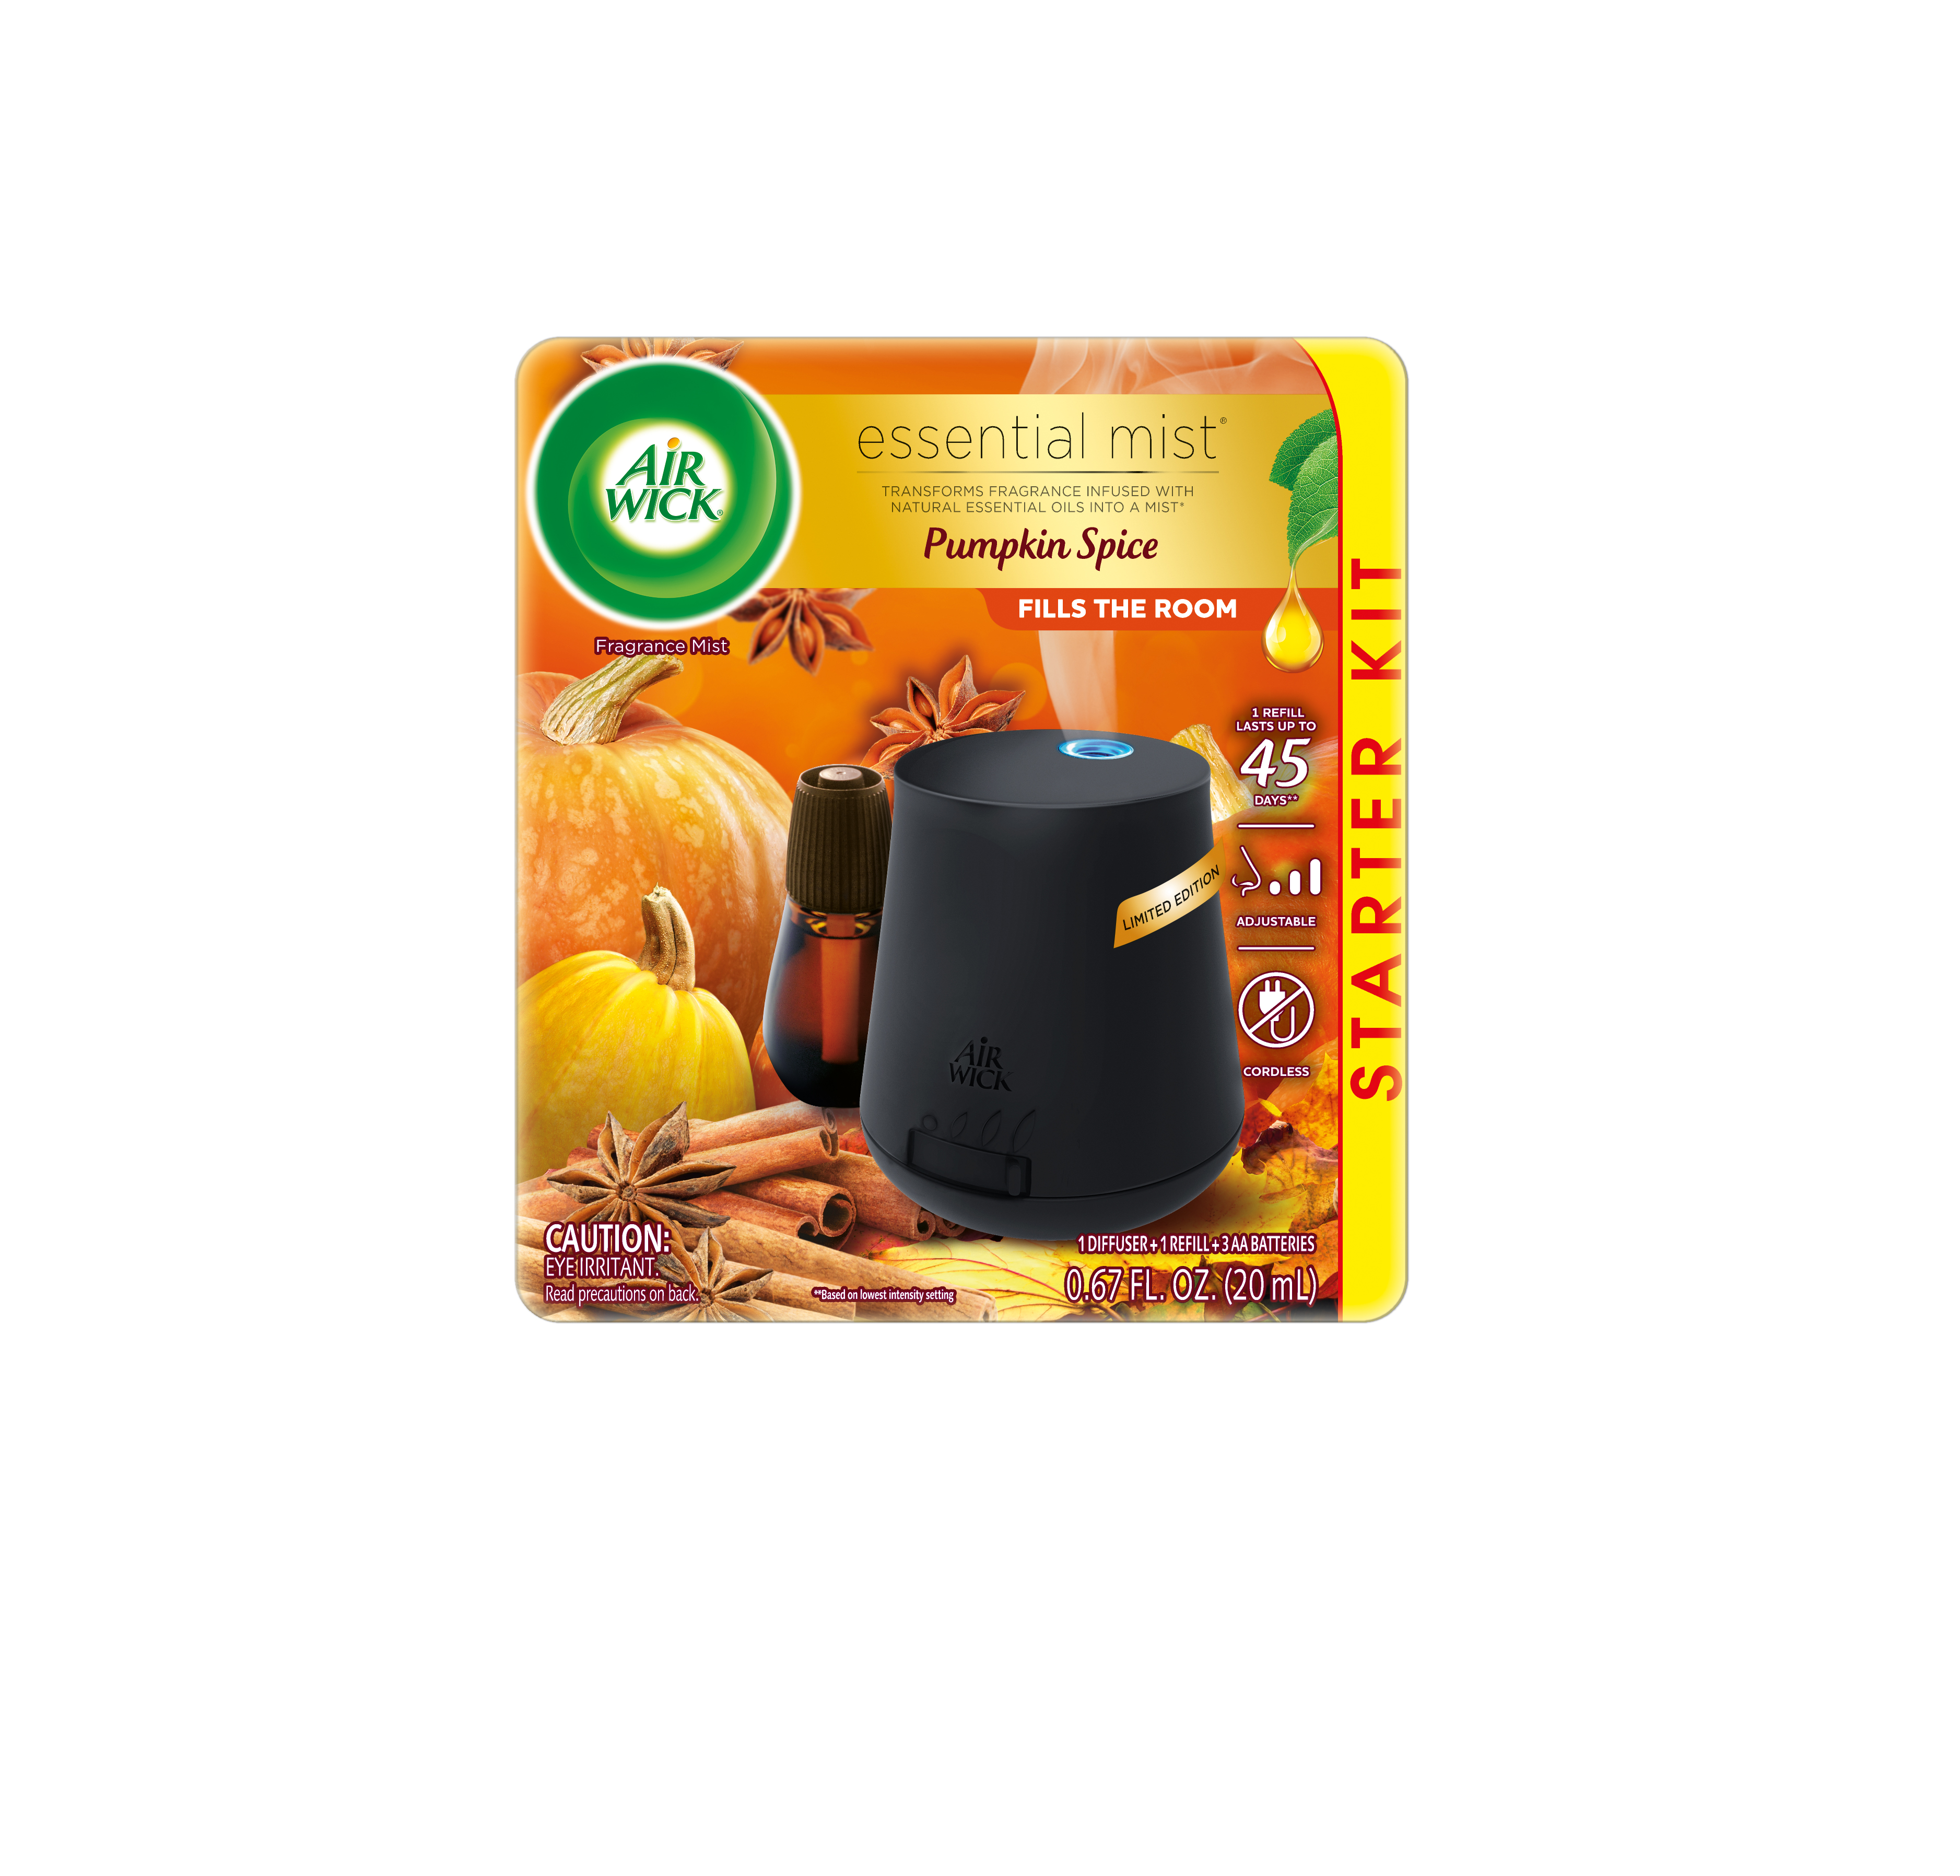 AIR WICK Essential Mist  Pumpkin Spice  Kit Discontinued